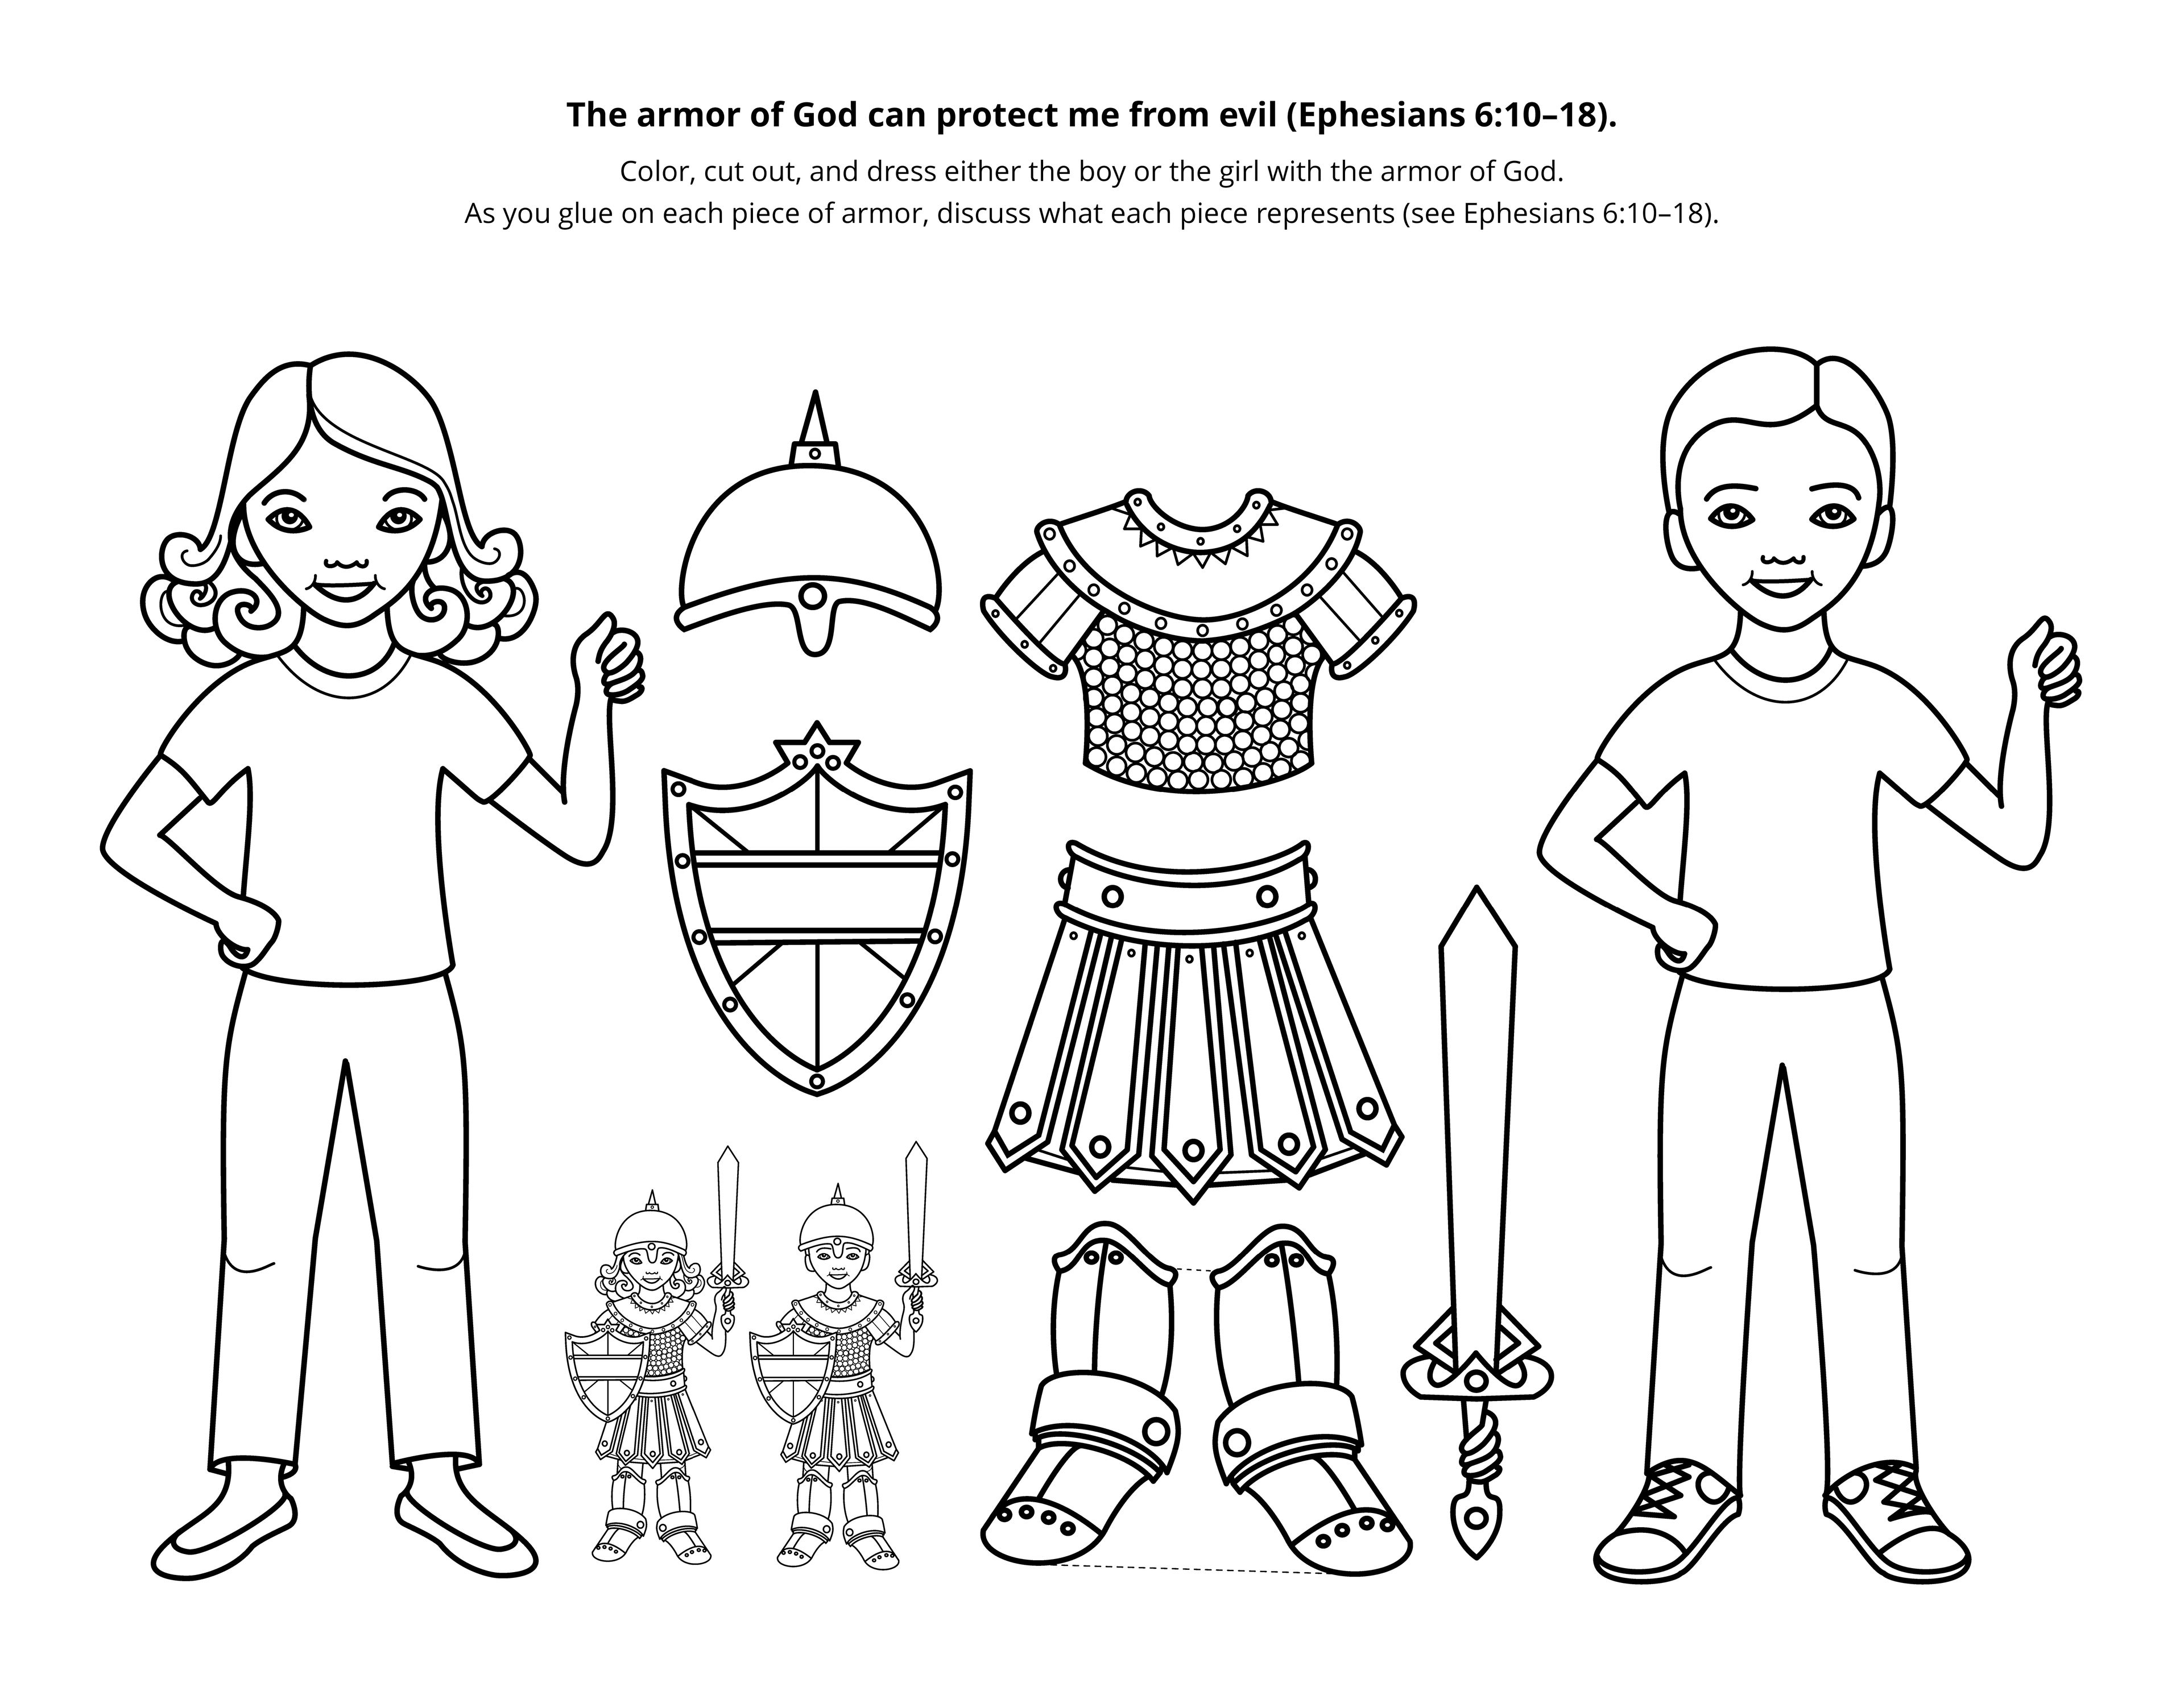 Paper dolls in armor.